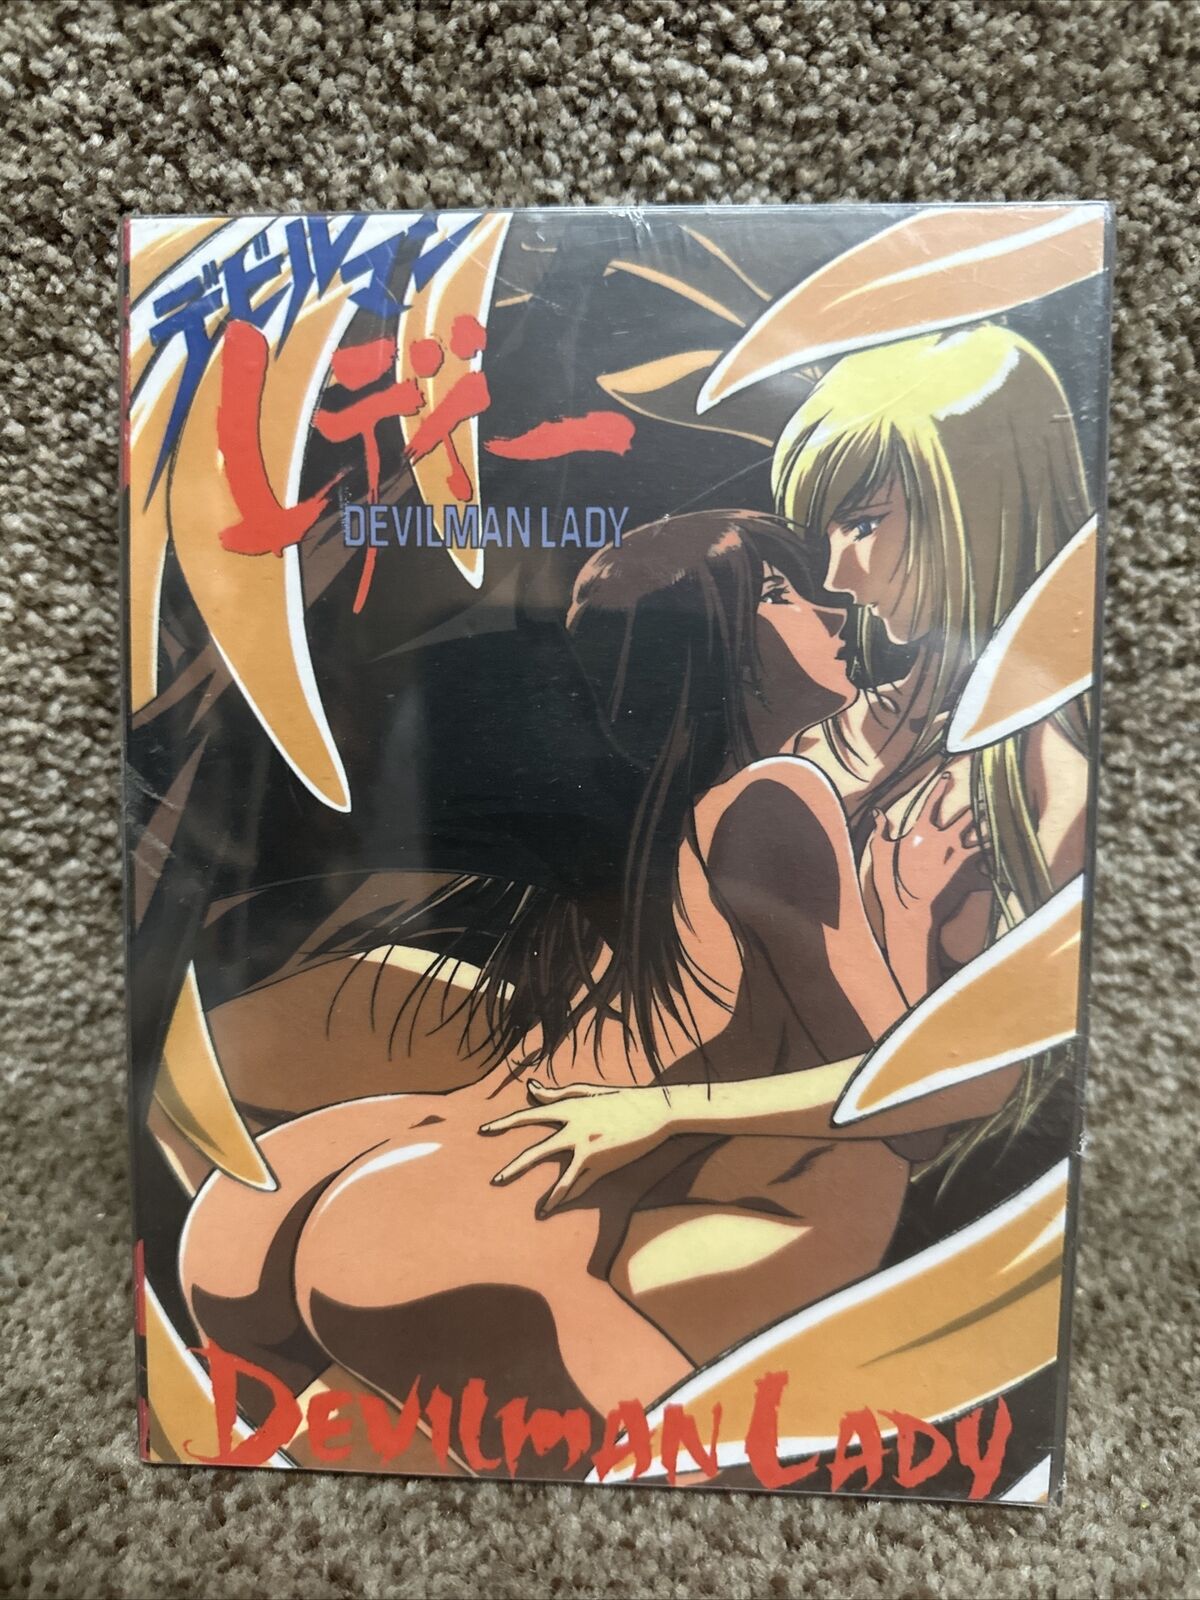 Rare Devilman Lady Anime/Manga Dvd 3 Disc Set Volume 1-3 Sealed New